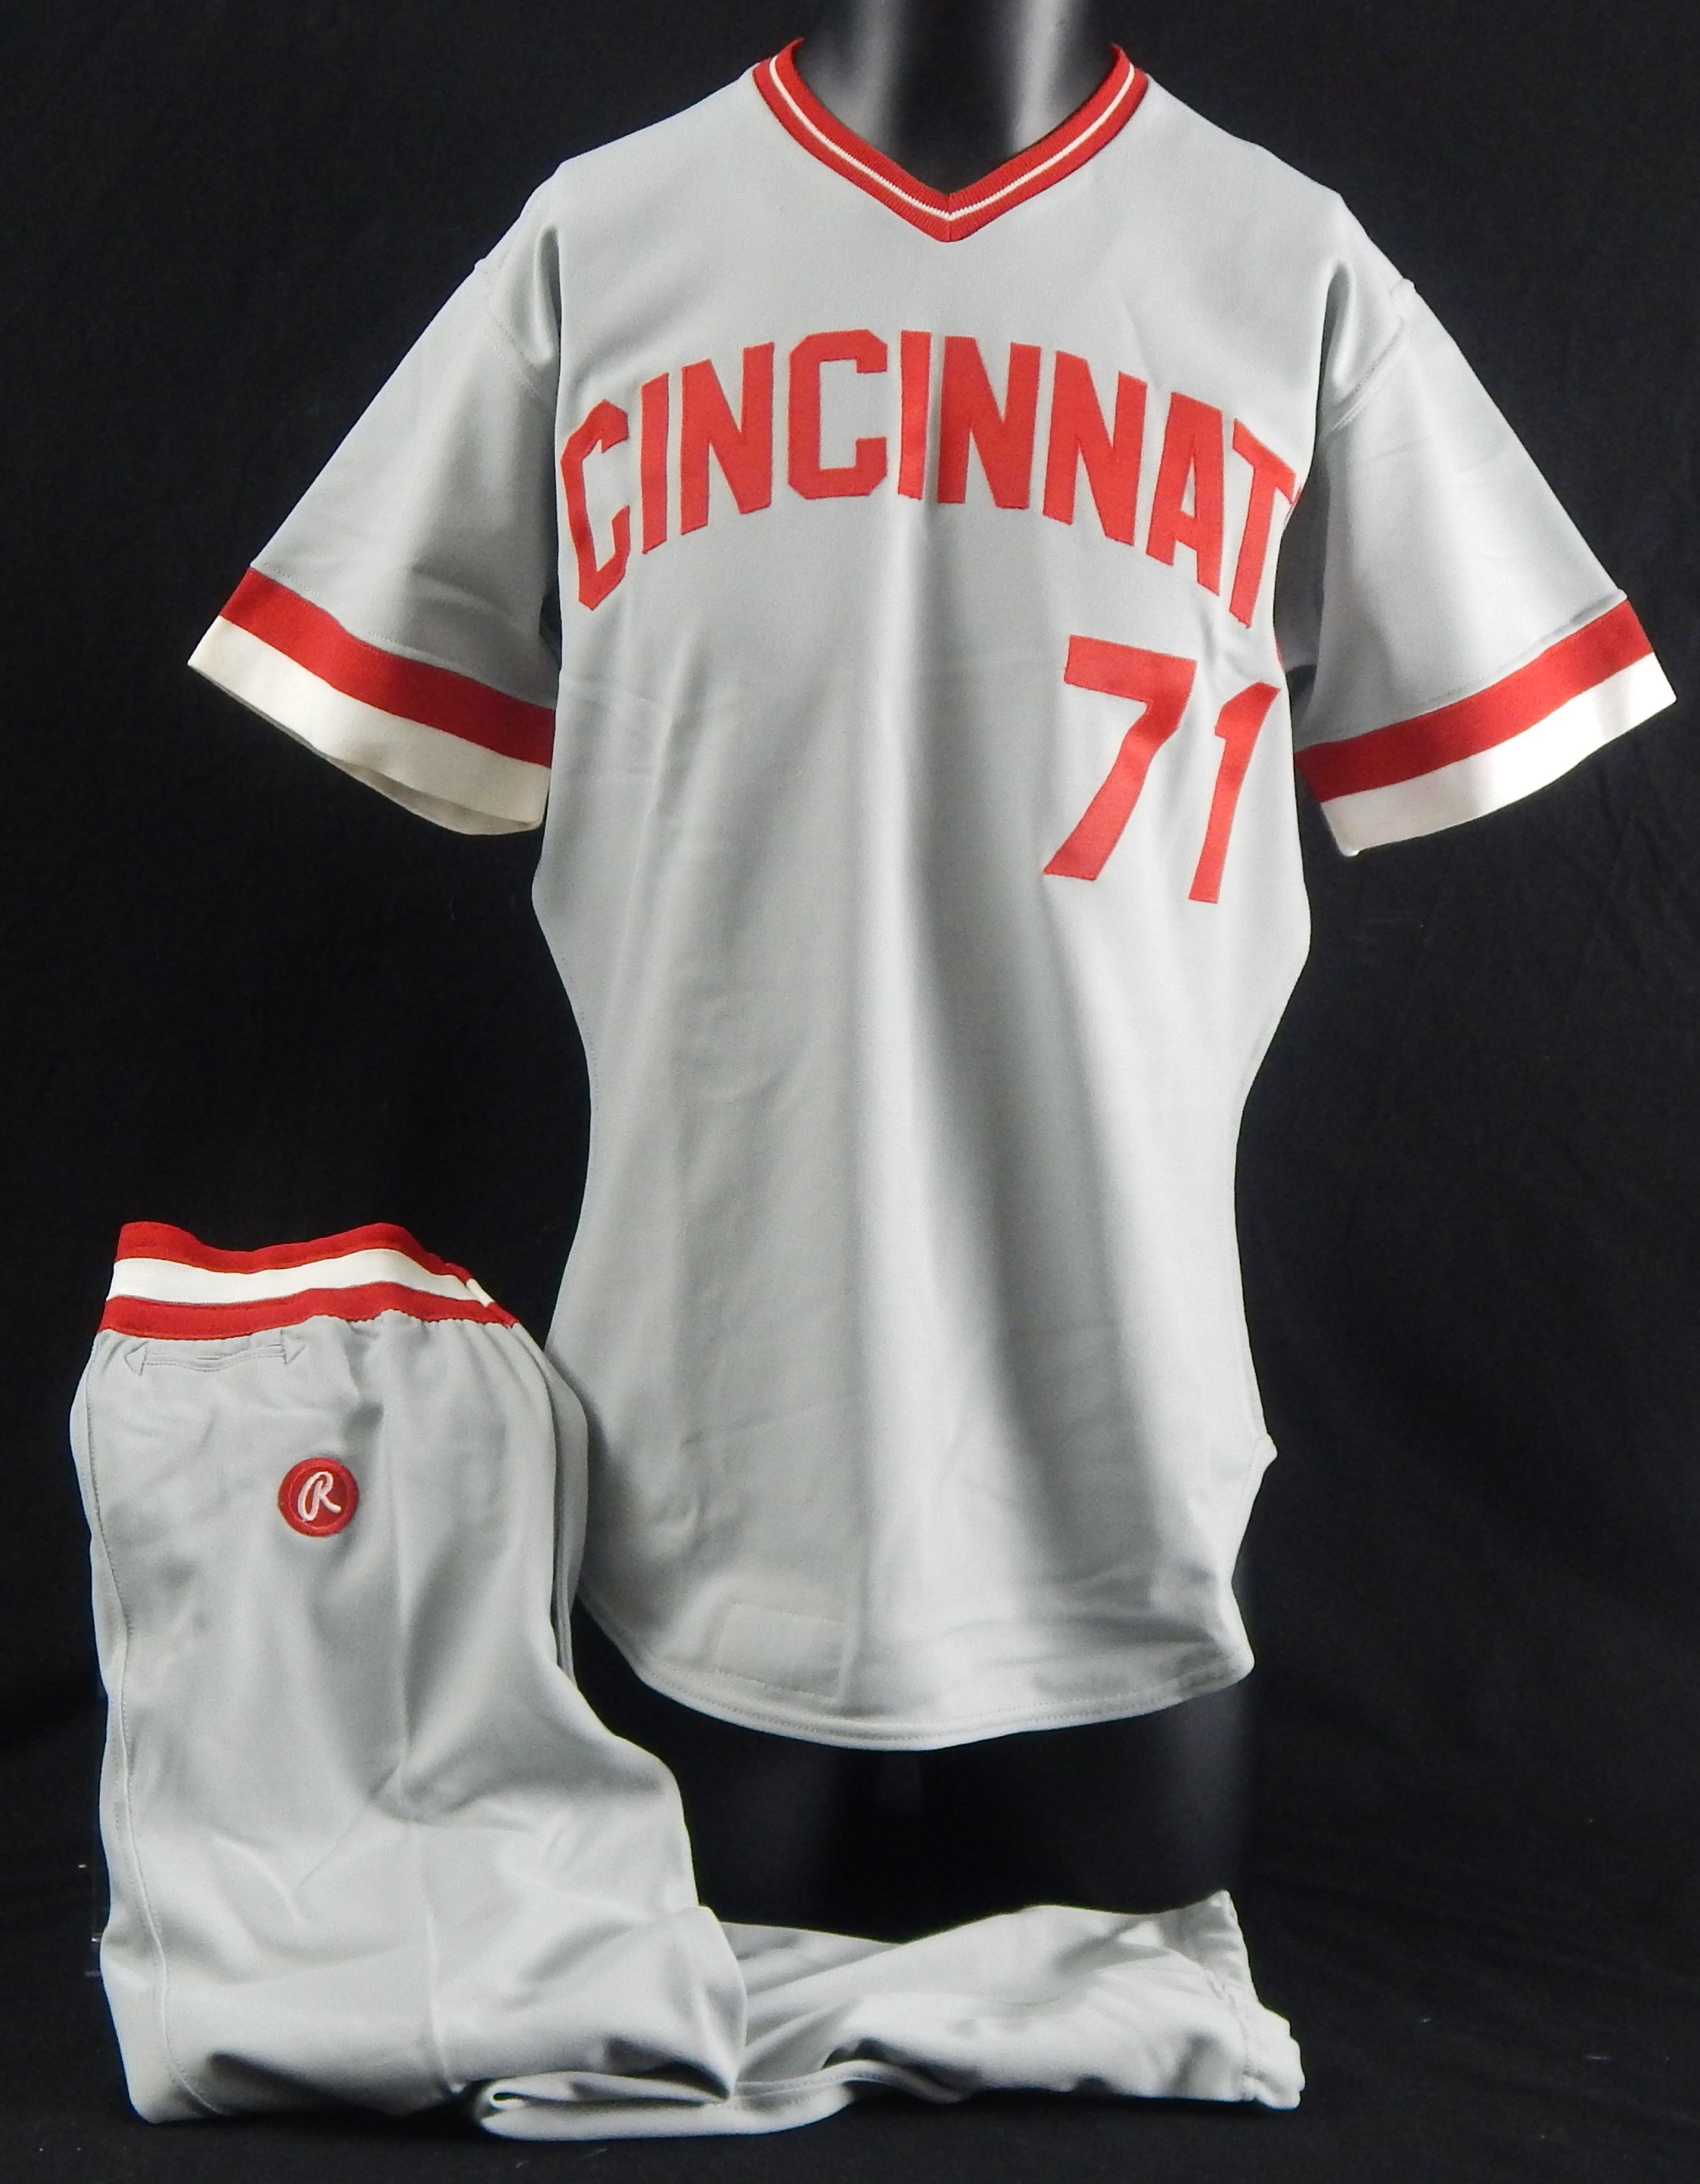 Uniforms - 1978 Tour of Japan Cincinnati Reds Uniform. From the Bernie Stowe Collection